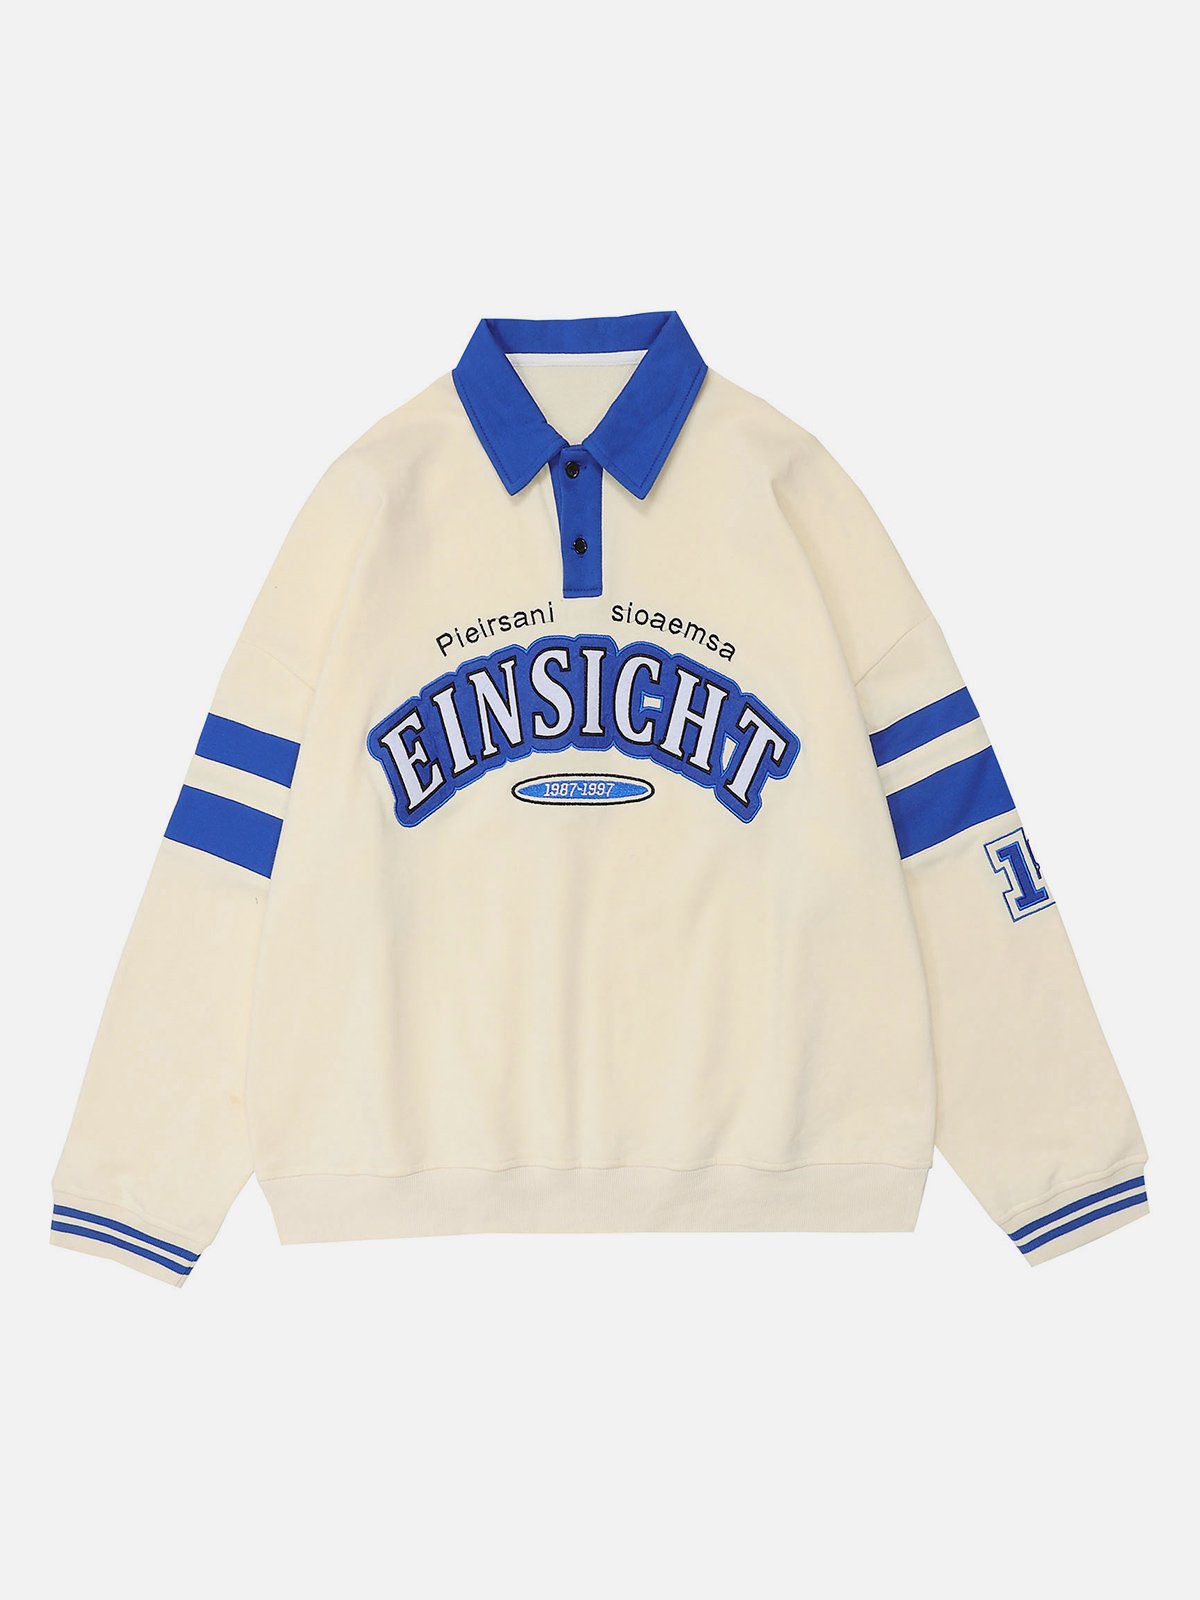 LUXENFY™ - "EINSICHT" Embroidery Sweatshirt luxenfy.com